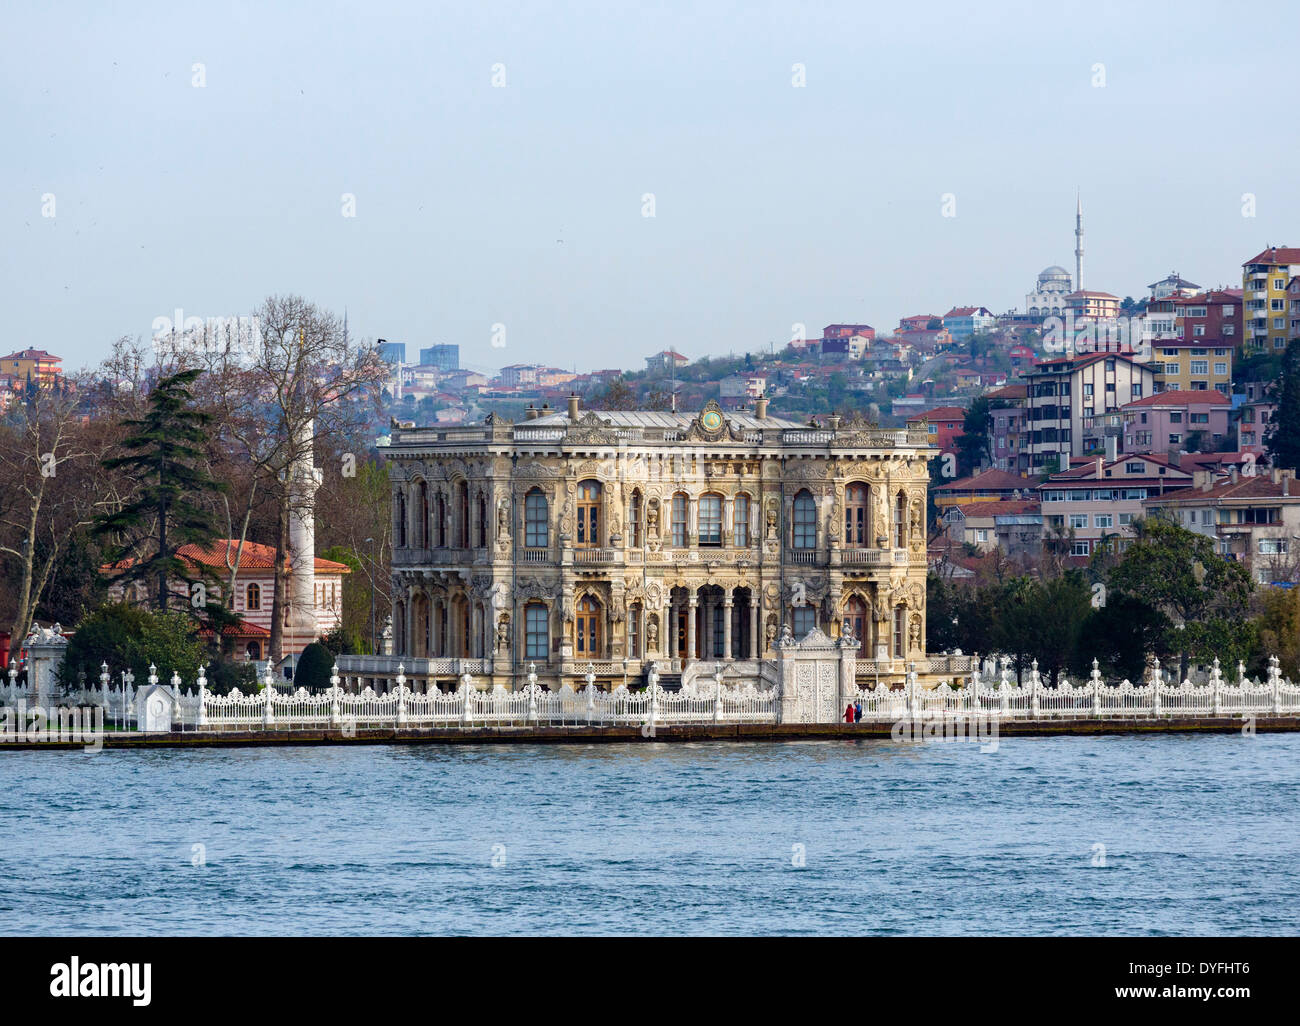 The Küçüksu Palace in Beykoz on the Asian shore of the Bosphorus, viewed from a Bosphorus cruise boat, Istanbul, Turkey Stock Photo